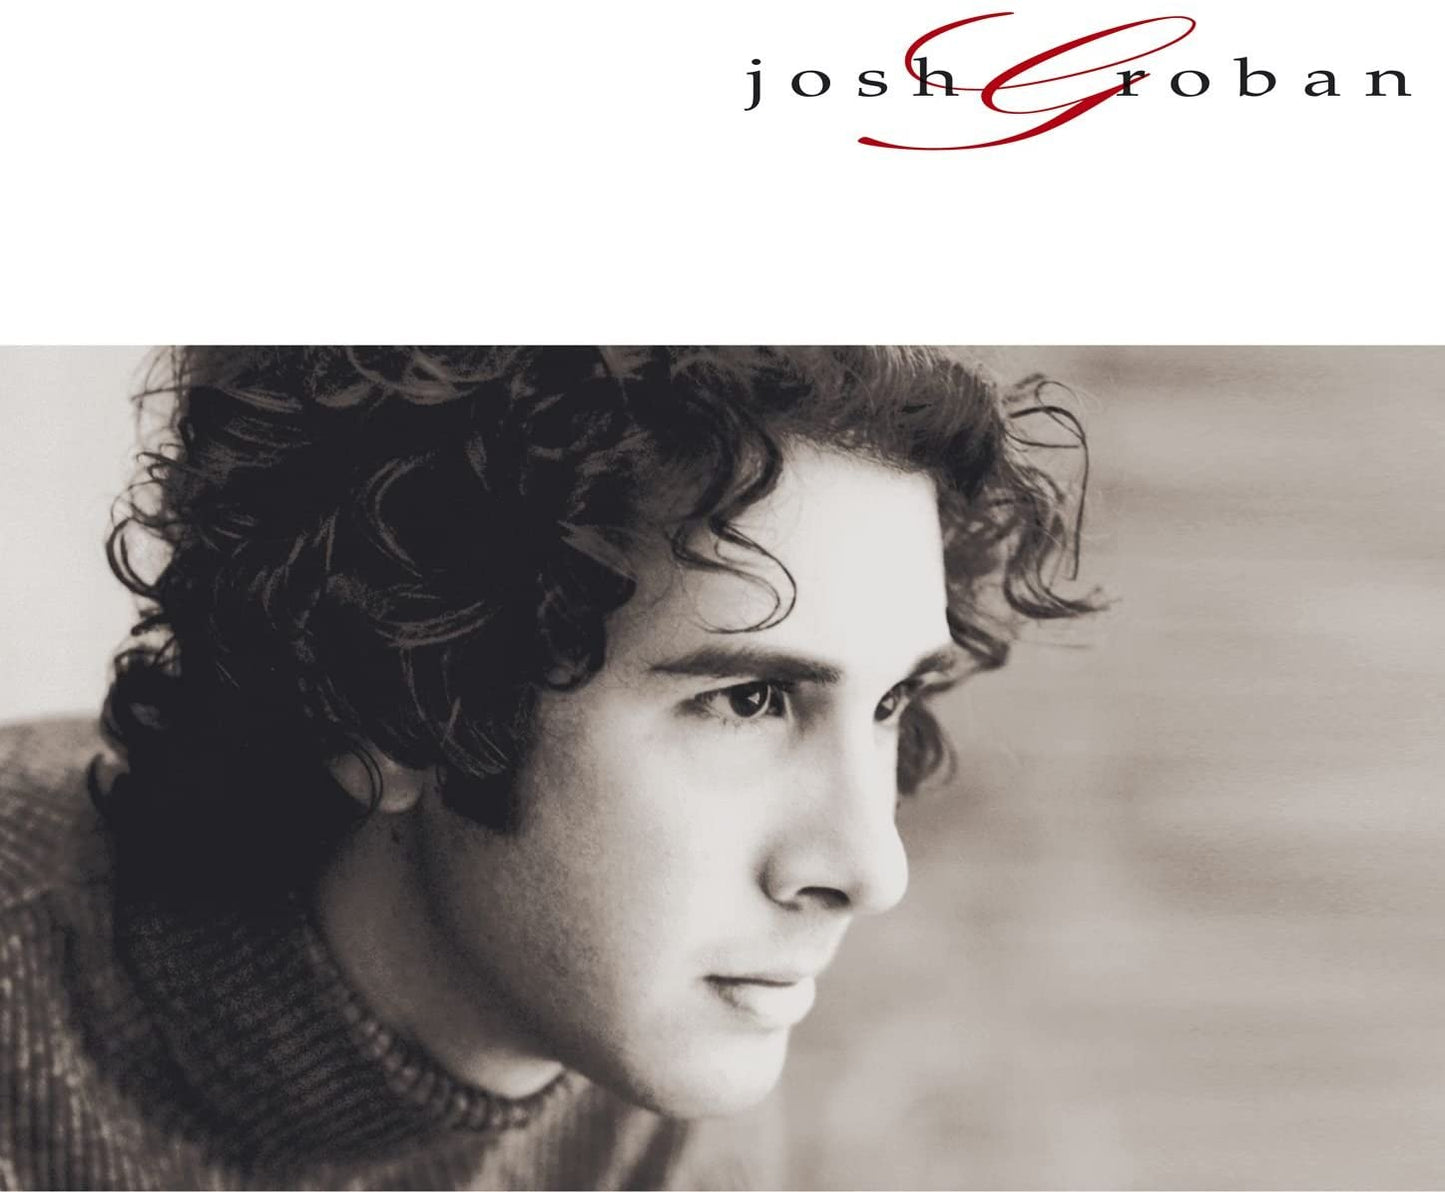 Josh Groban [Audio CD] Josh Groban